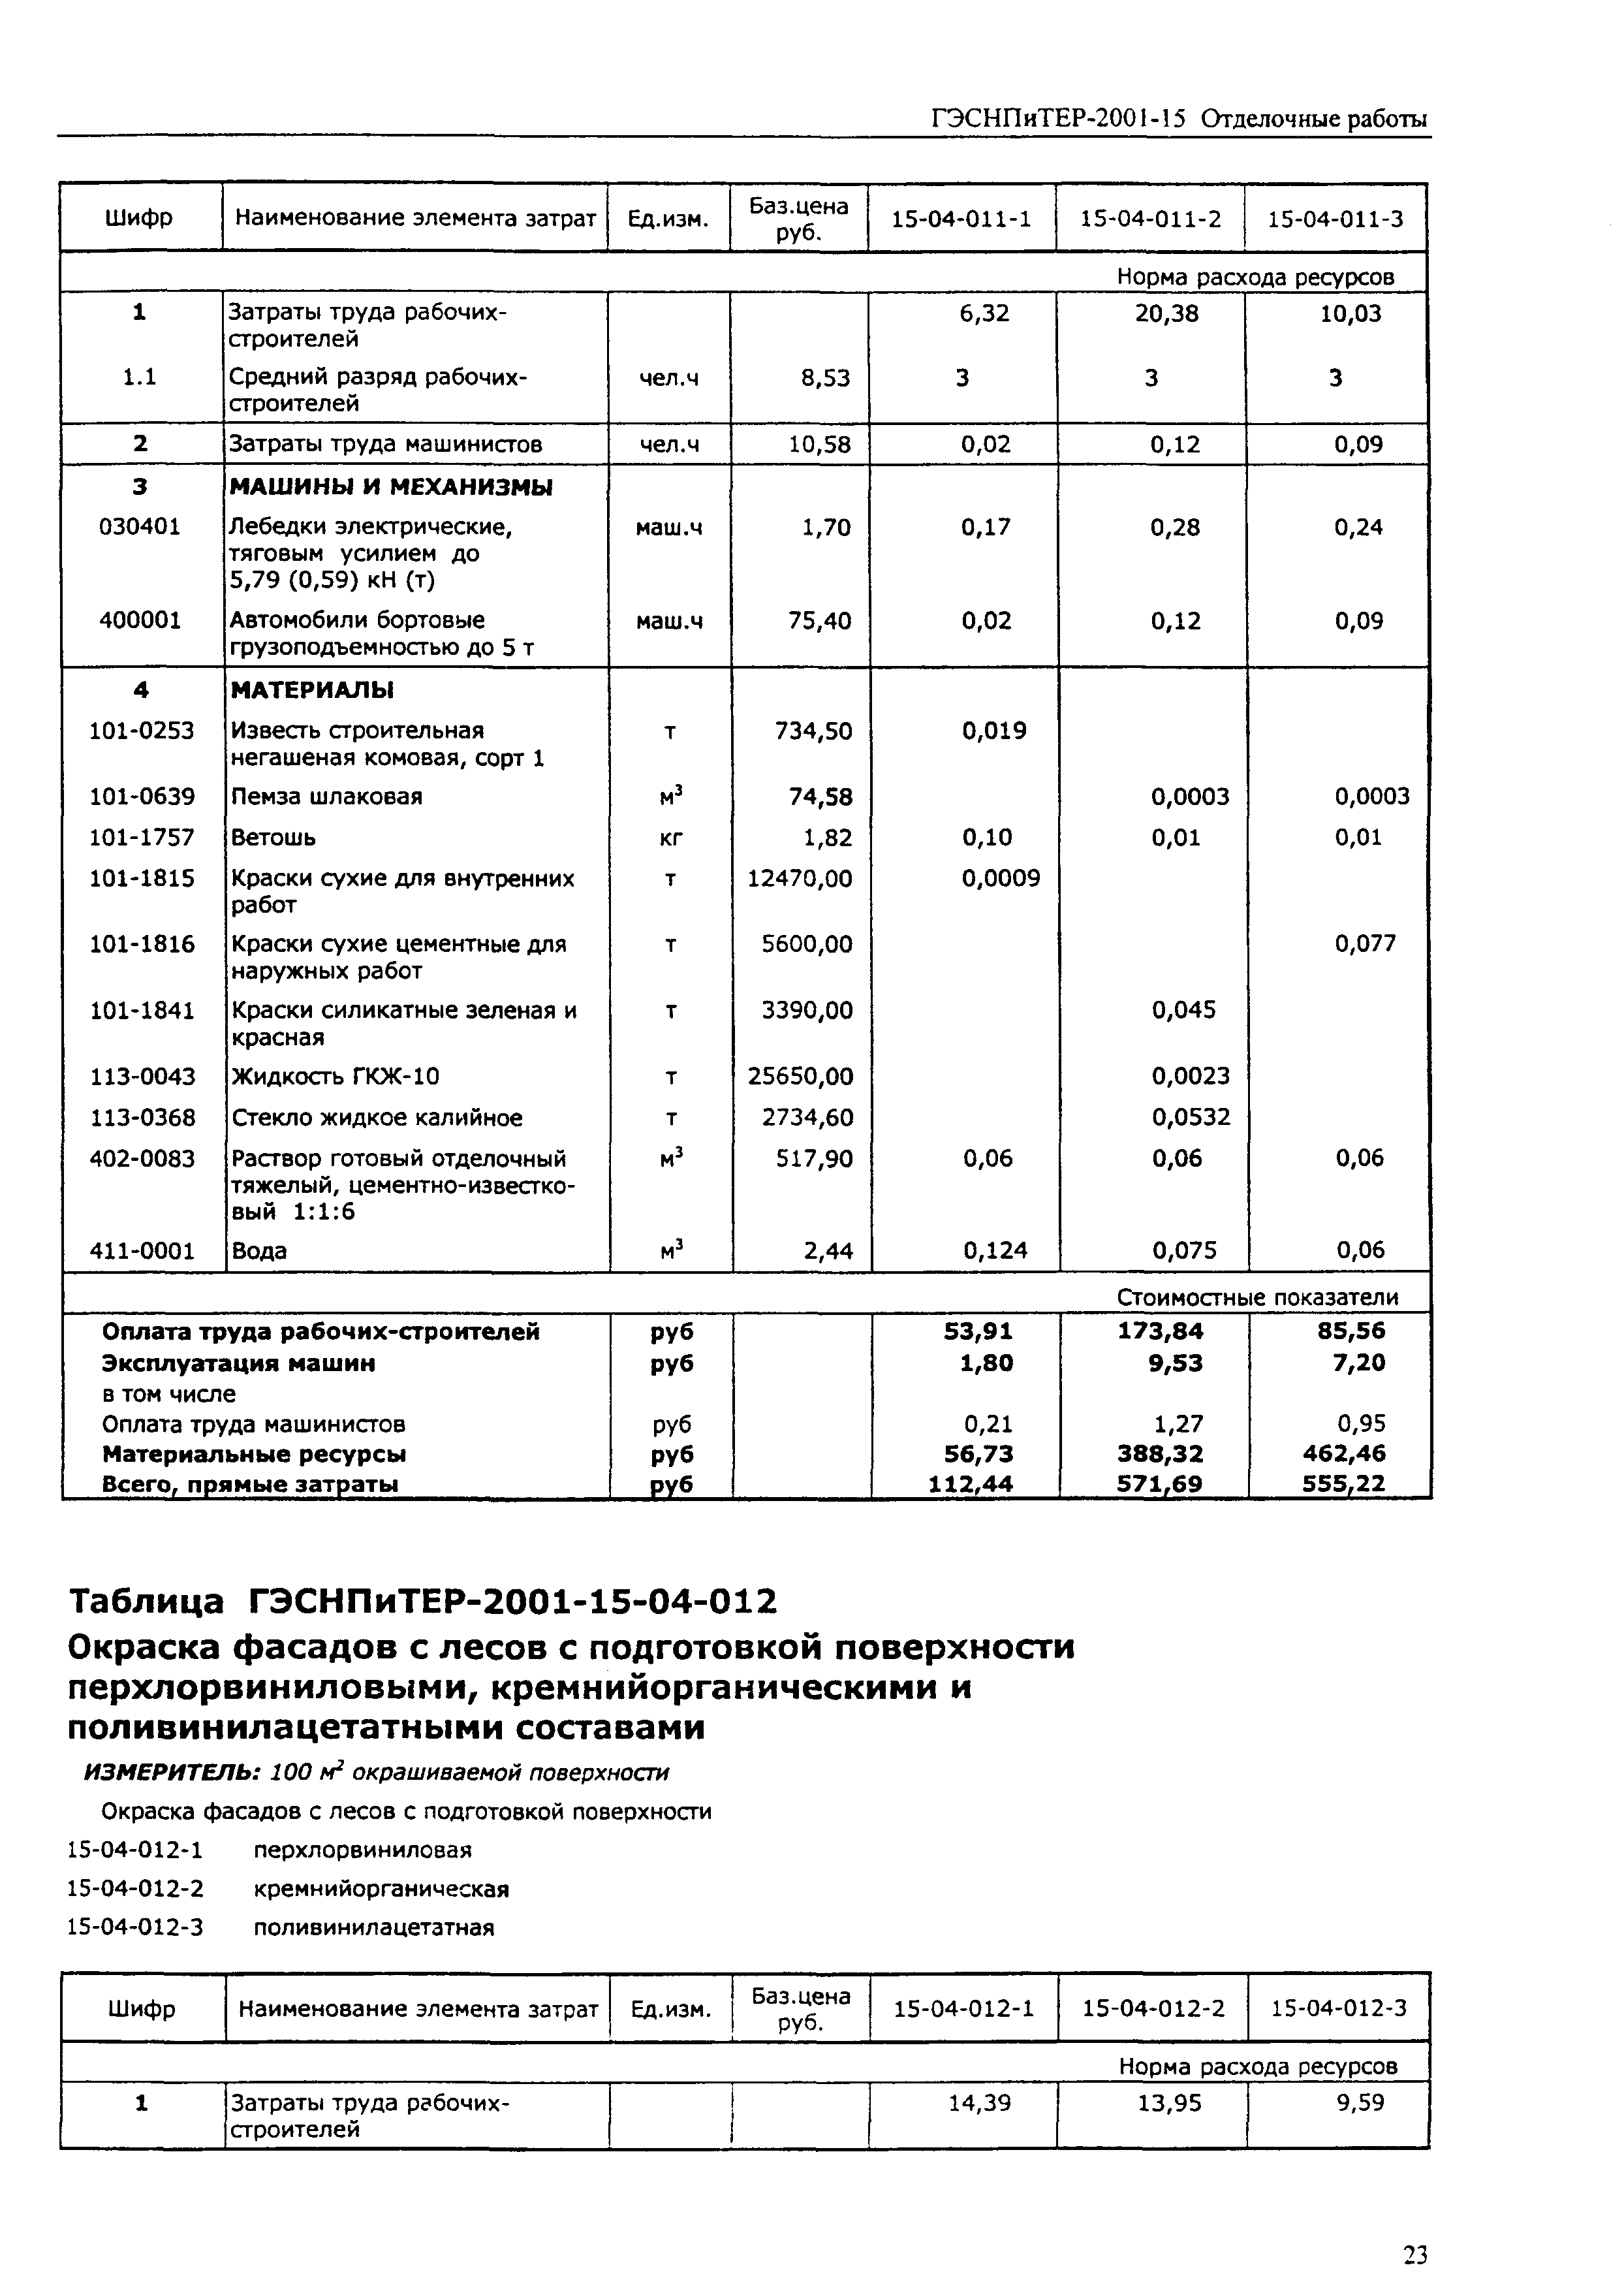 ГЭСНПиТЕР 2001-15 (III)